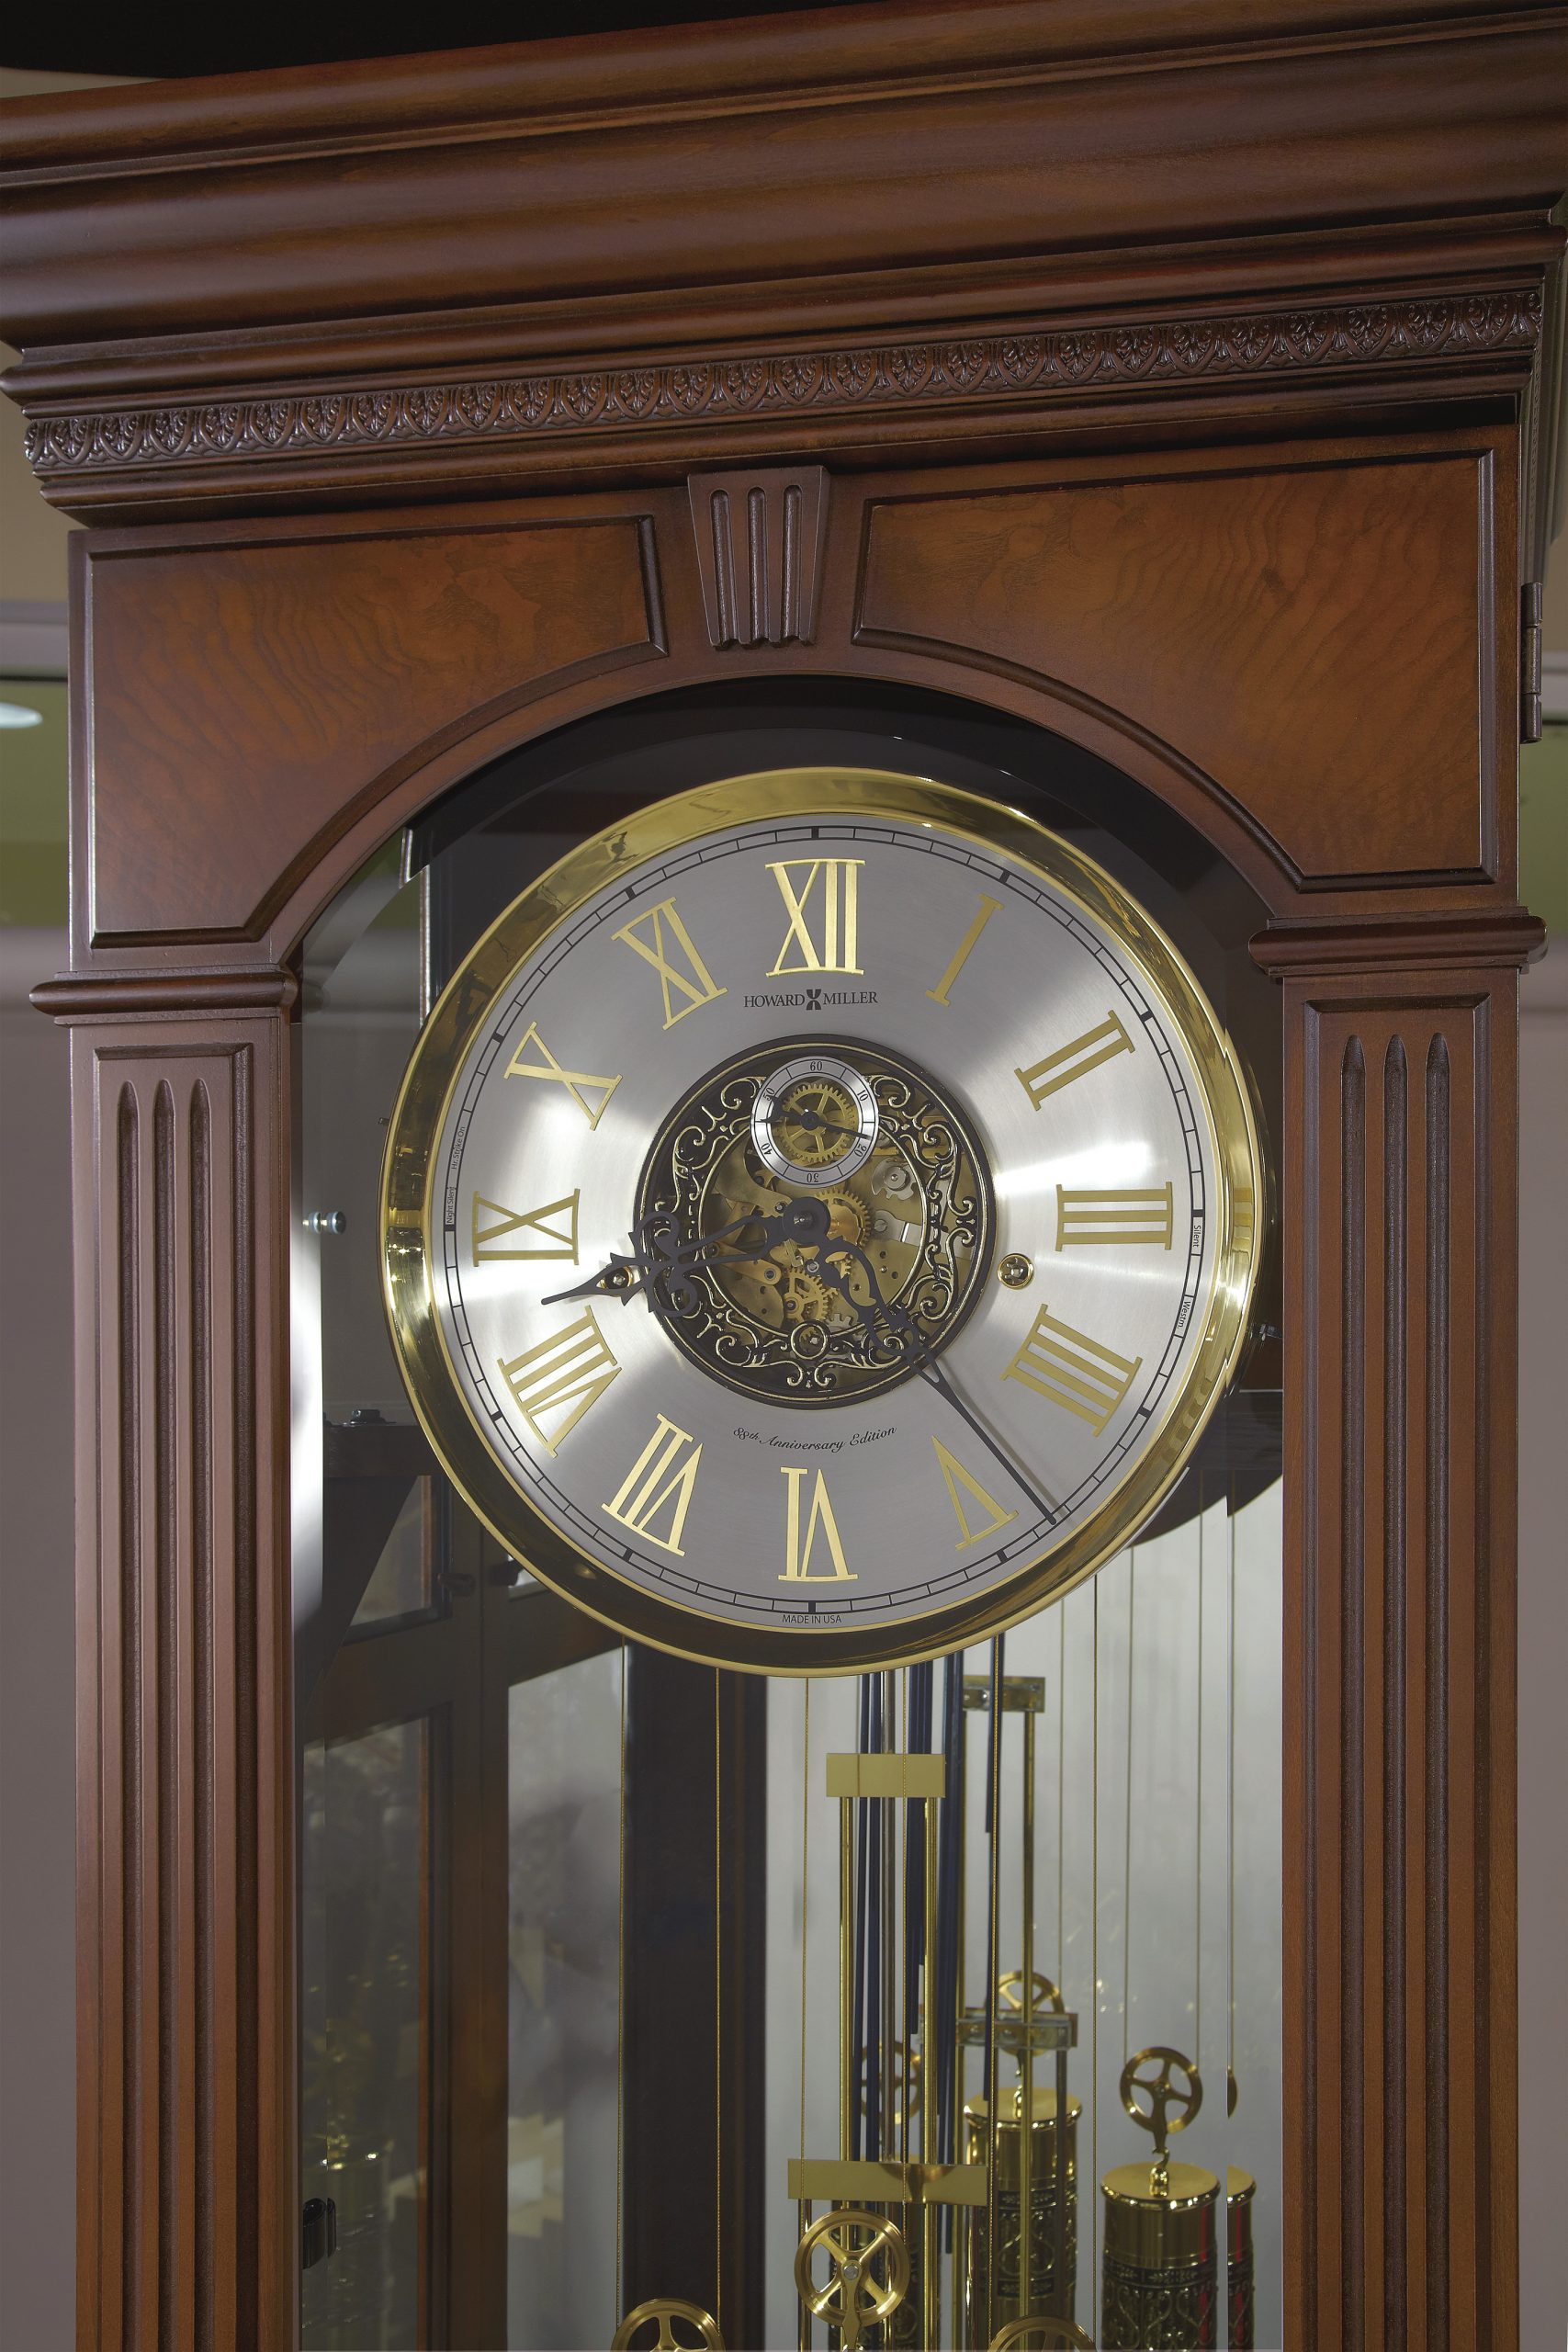 Howard Miller Stratford Grandfather Clock 611-132